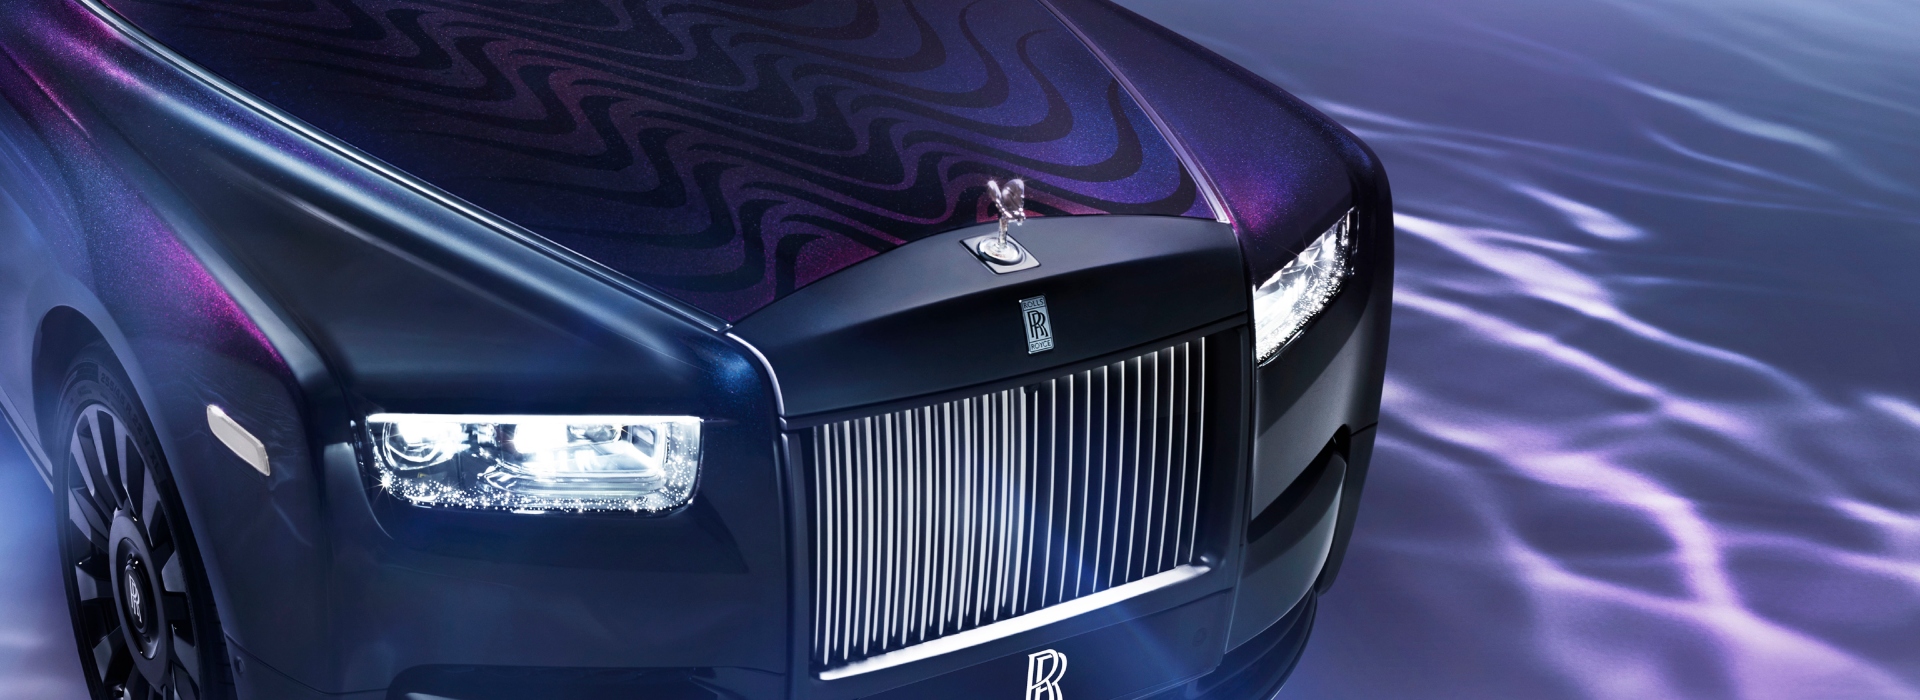 Rolls Royce Phantom Syntopia - besprekorno remek delo inspirisano visokom modom